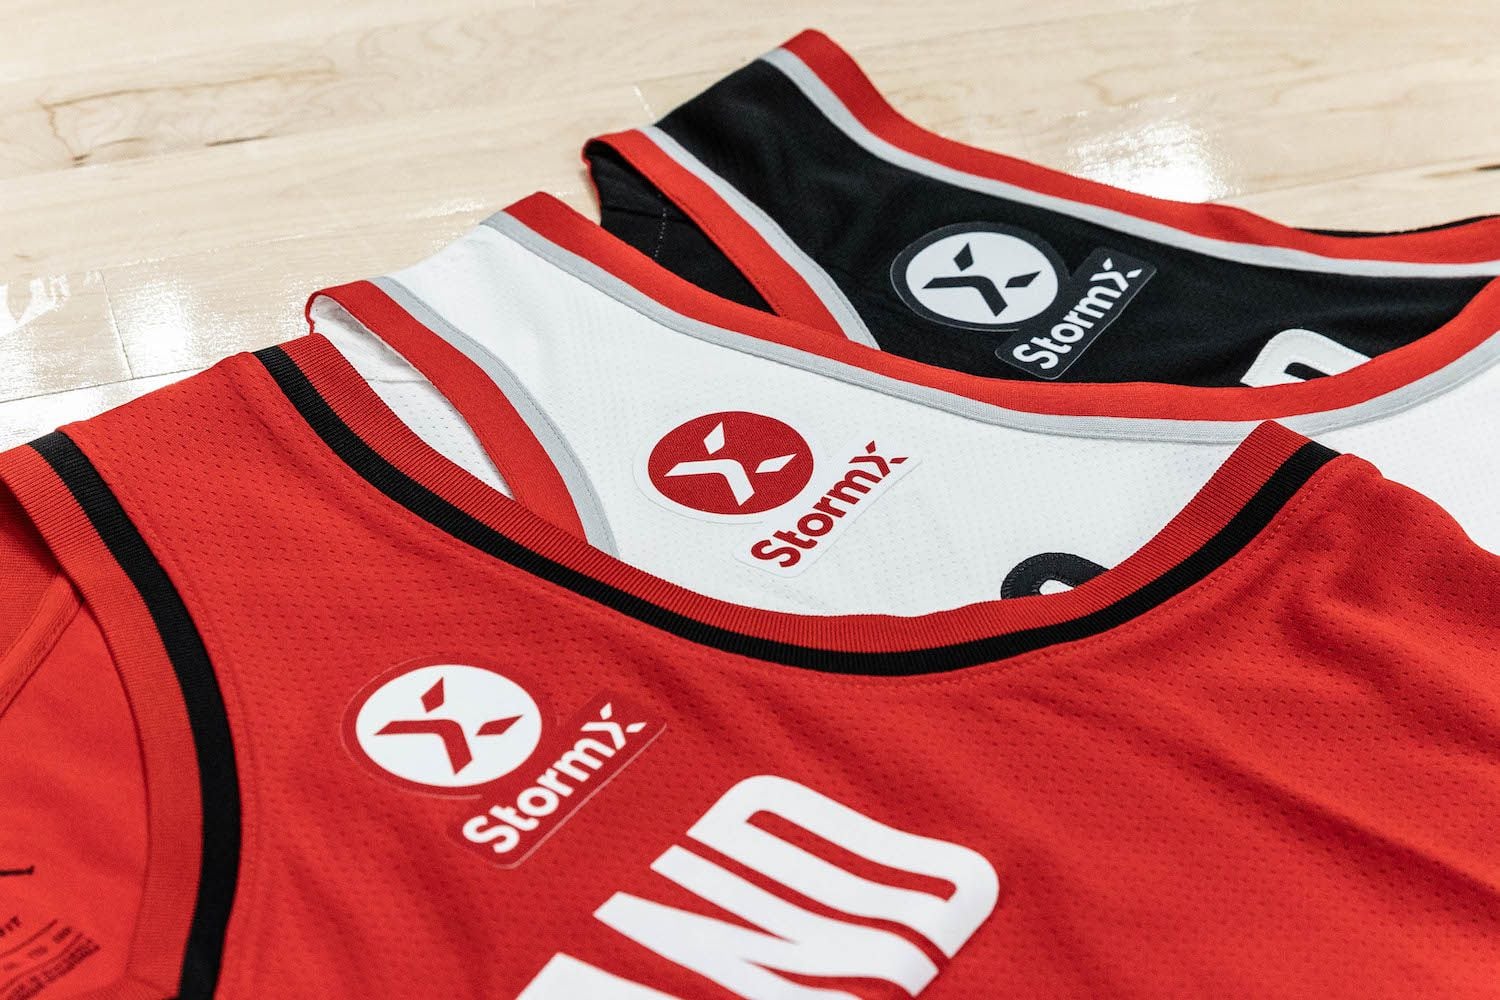 StormX patches will adorn Blazers jerseys starting next season.